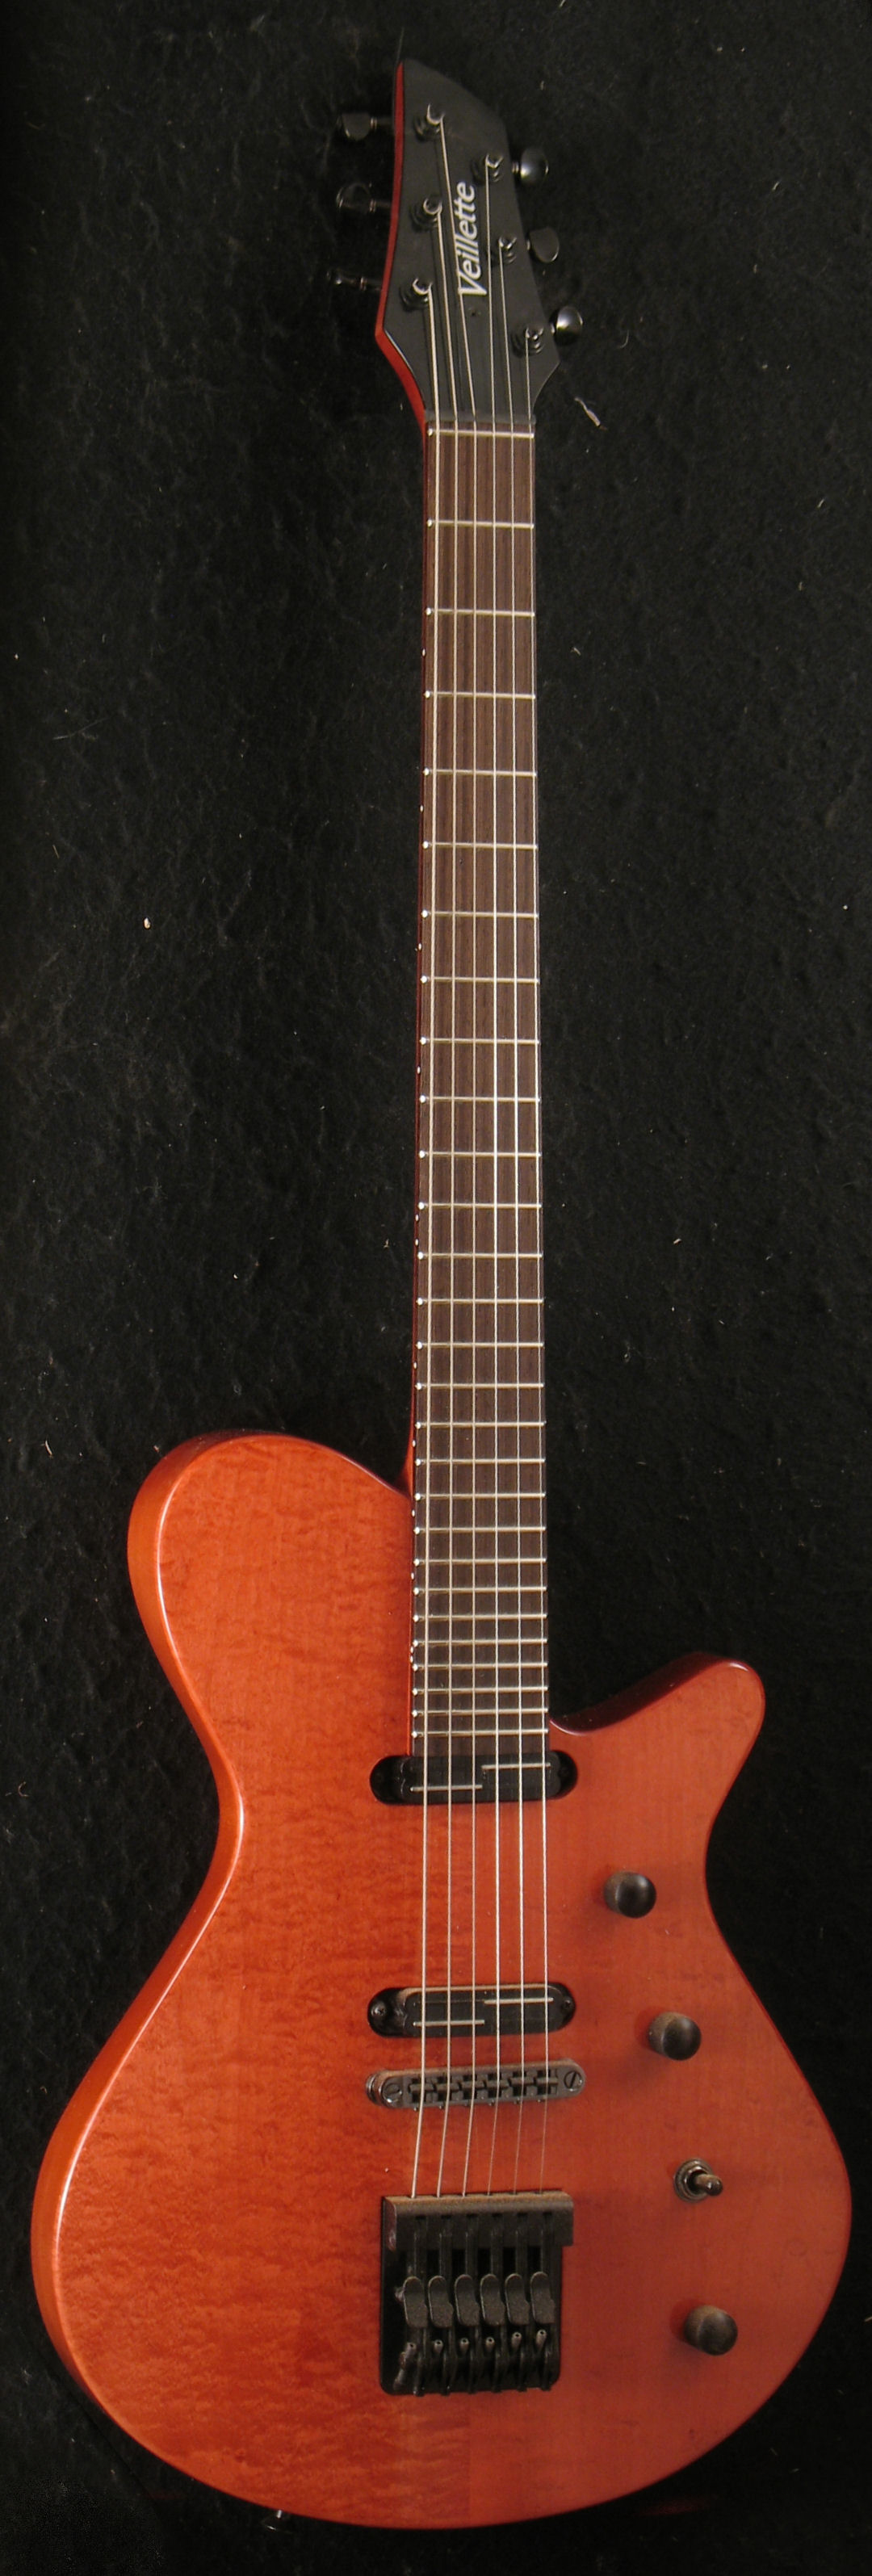 Custom Veillette 6-string - Joey Weisenberg